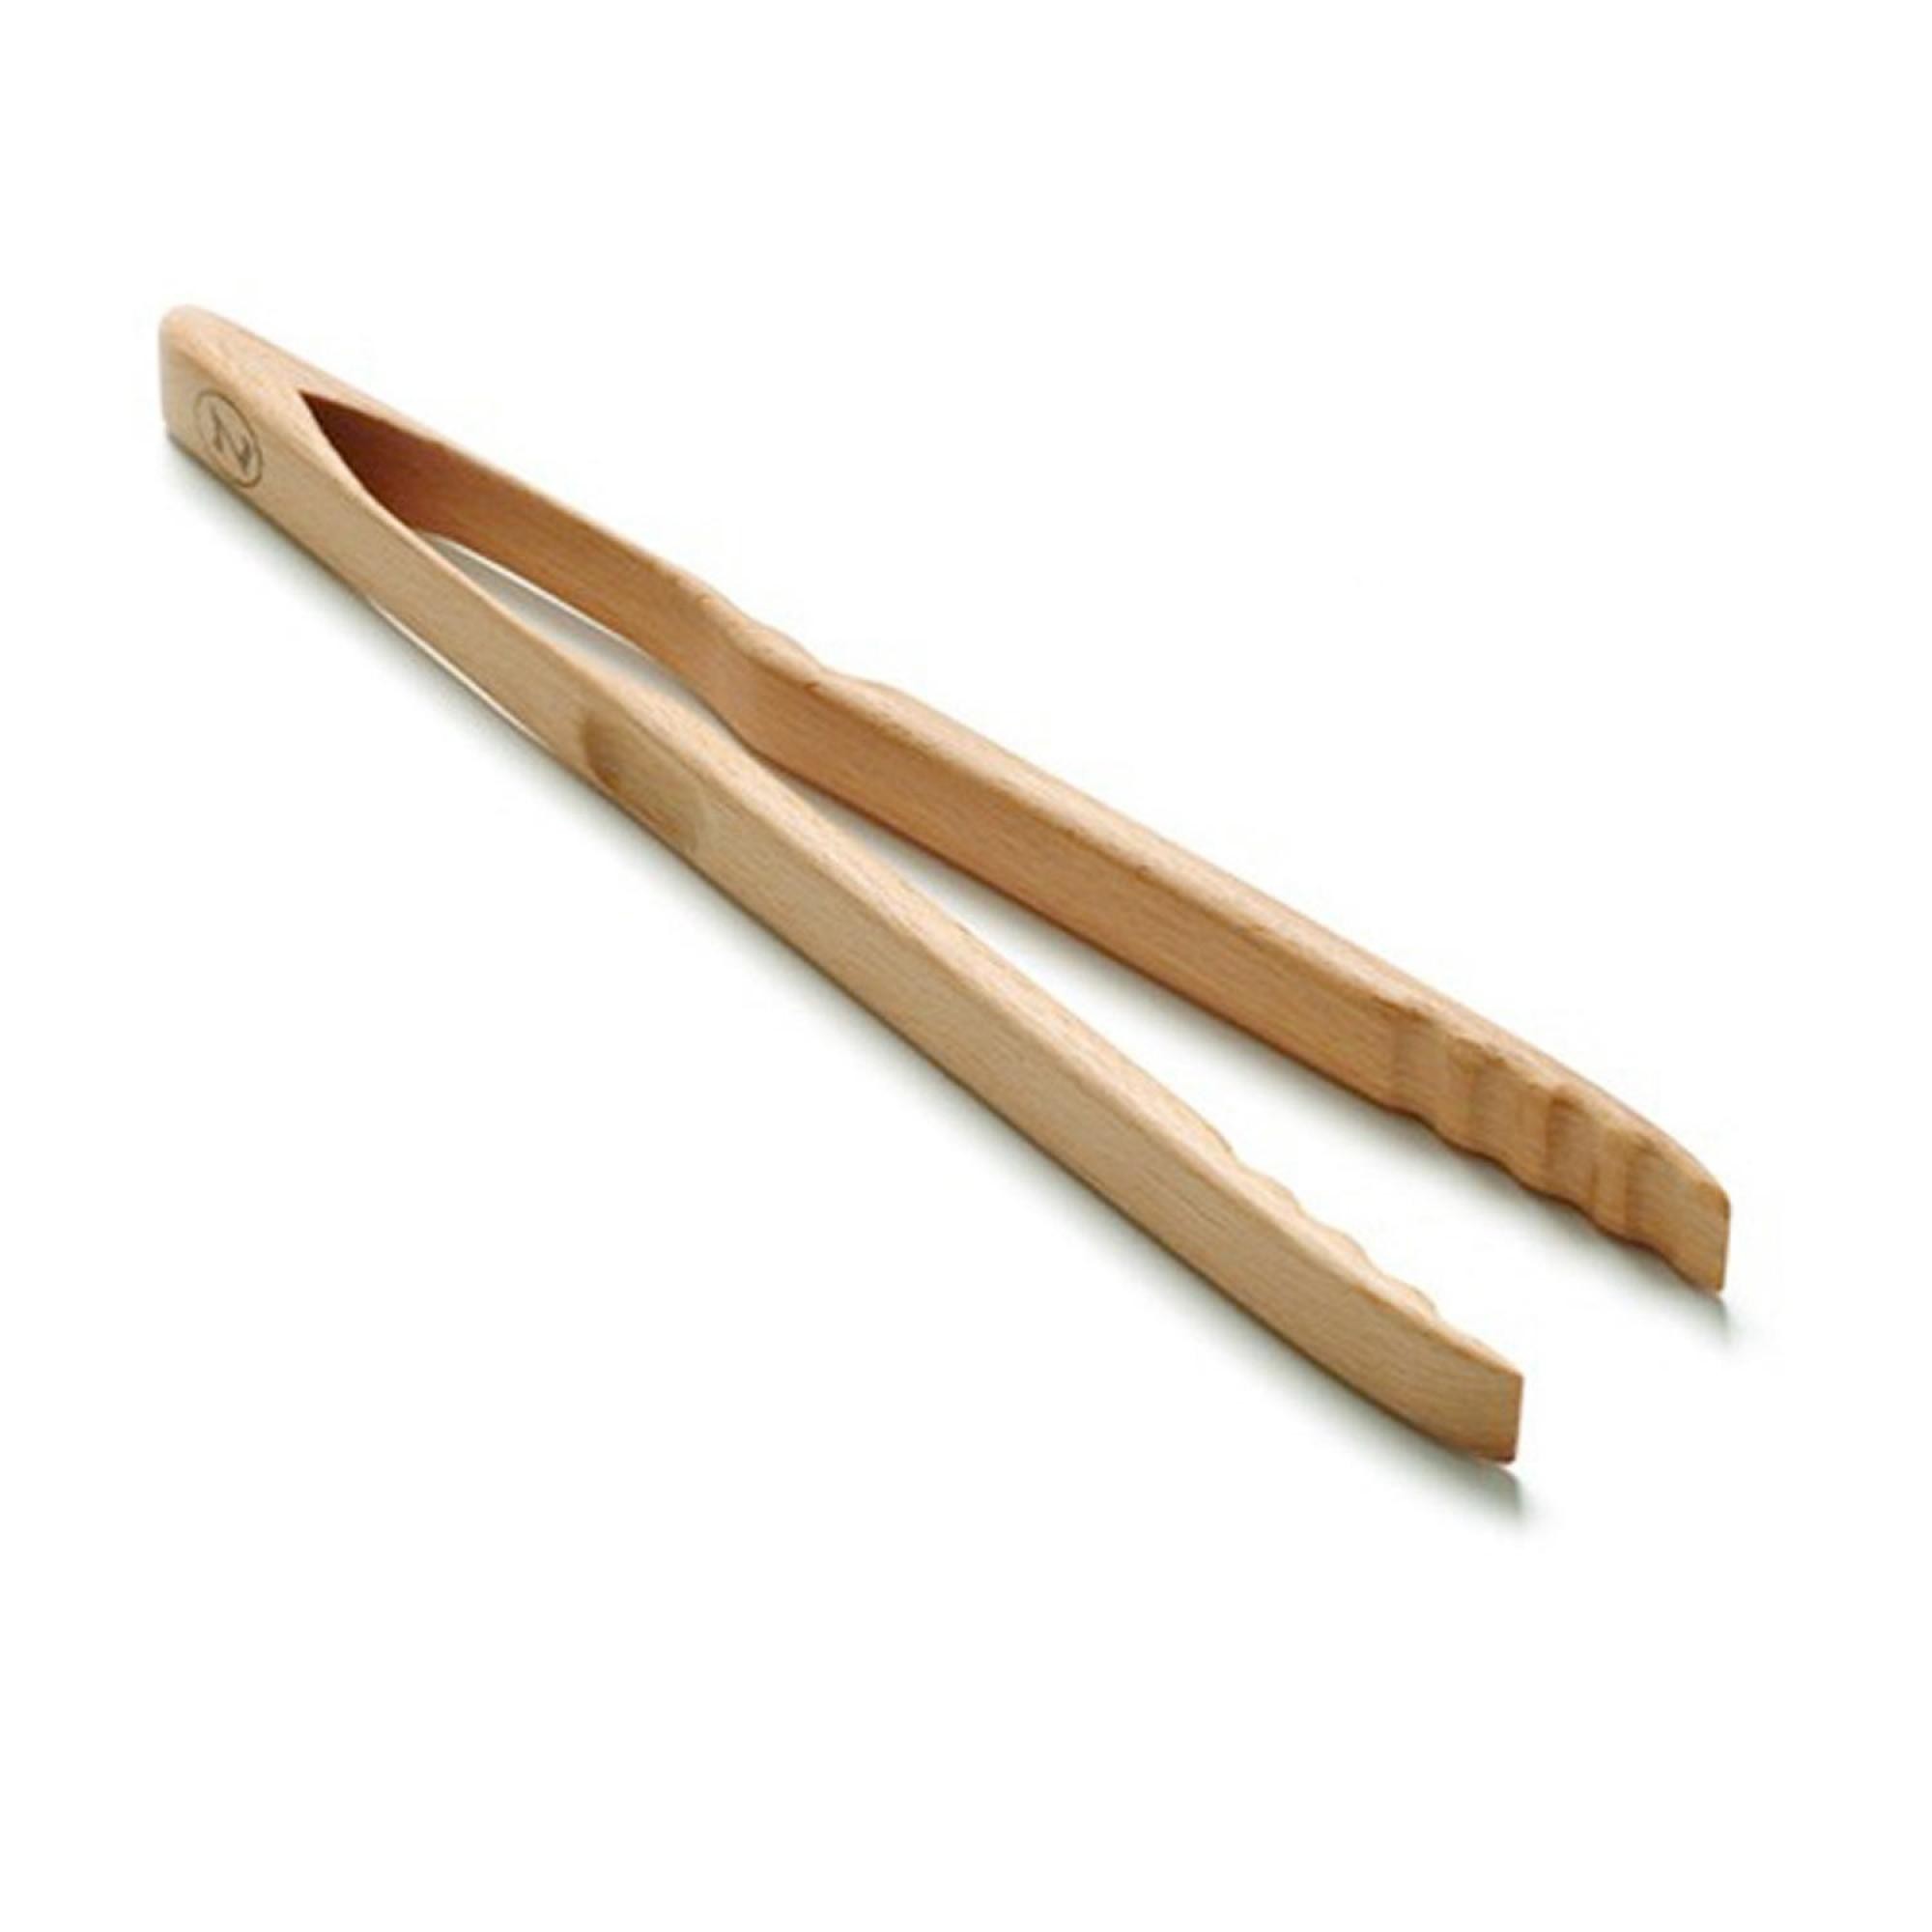 Grillzange aus Holz 46 cm